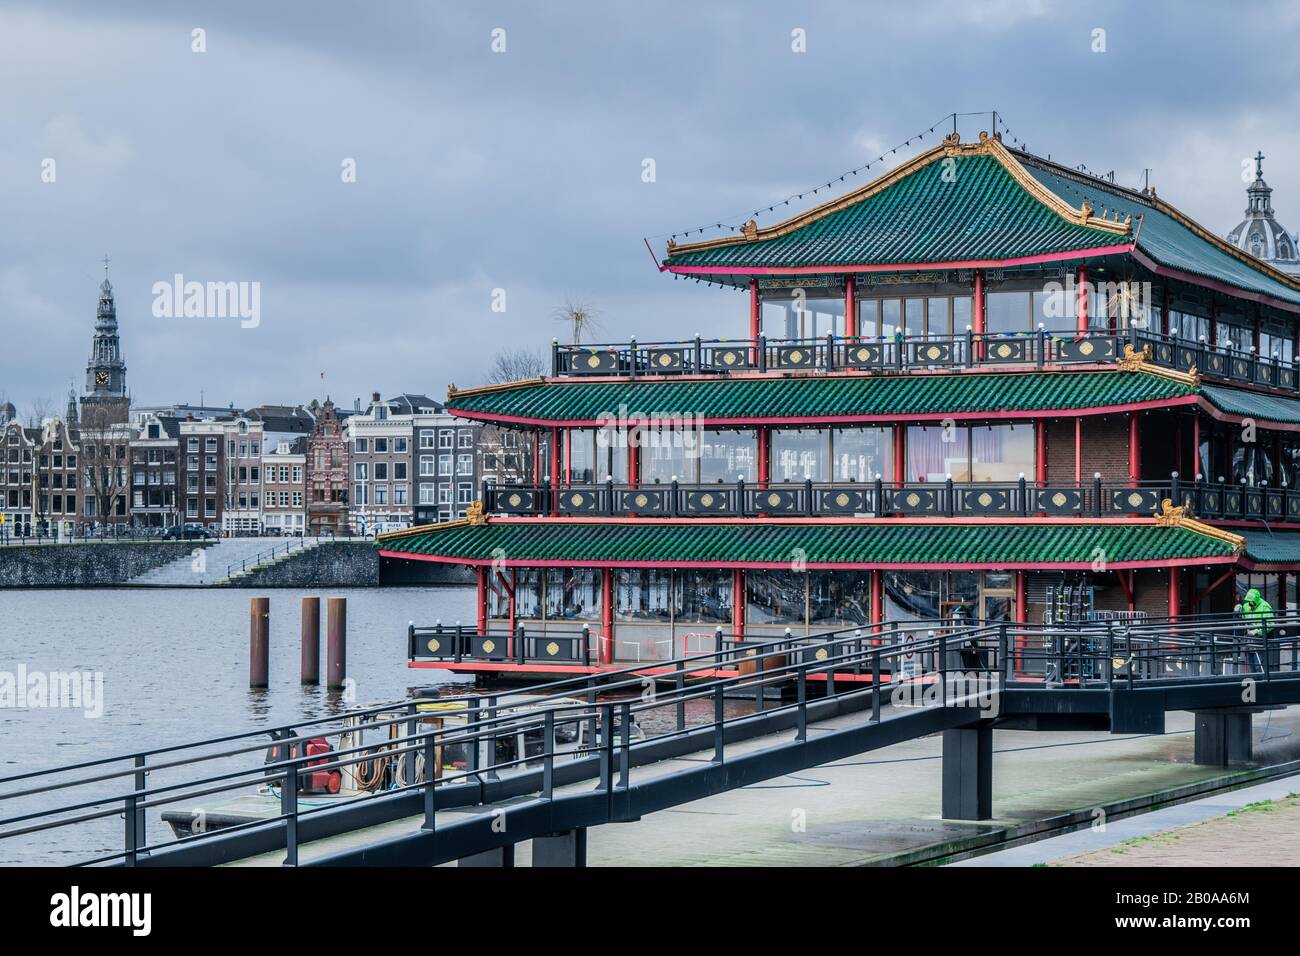 AMSTERDAM, NETHERLANDS - FEBRUARY 2020: Amsterdam excellent Sea Palace Restaurant (1984) - 3-story floating pagoda-style restaurant on Lake IJ. Sea Pa Stock Photo